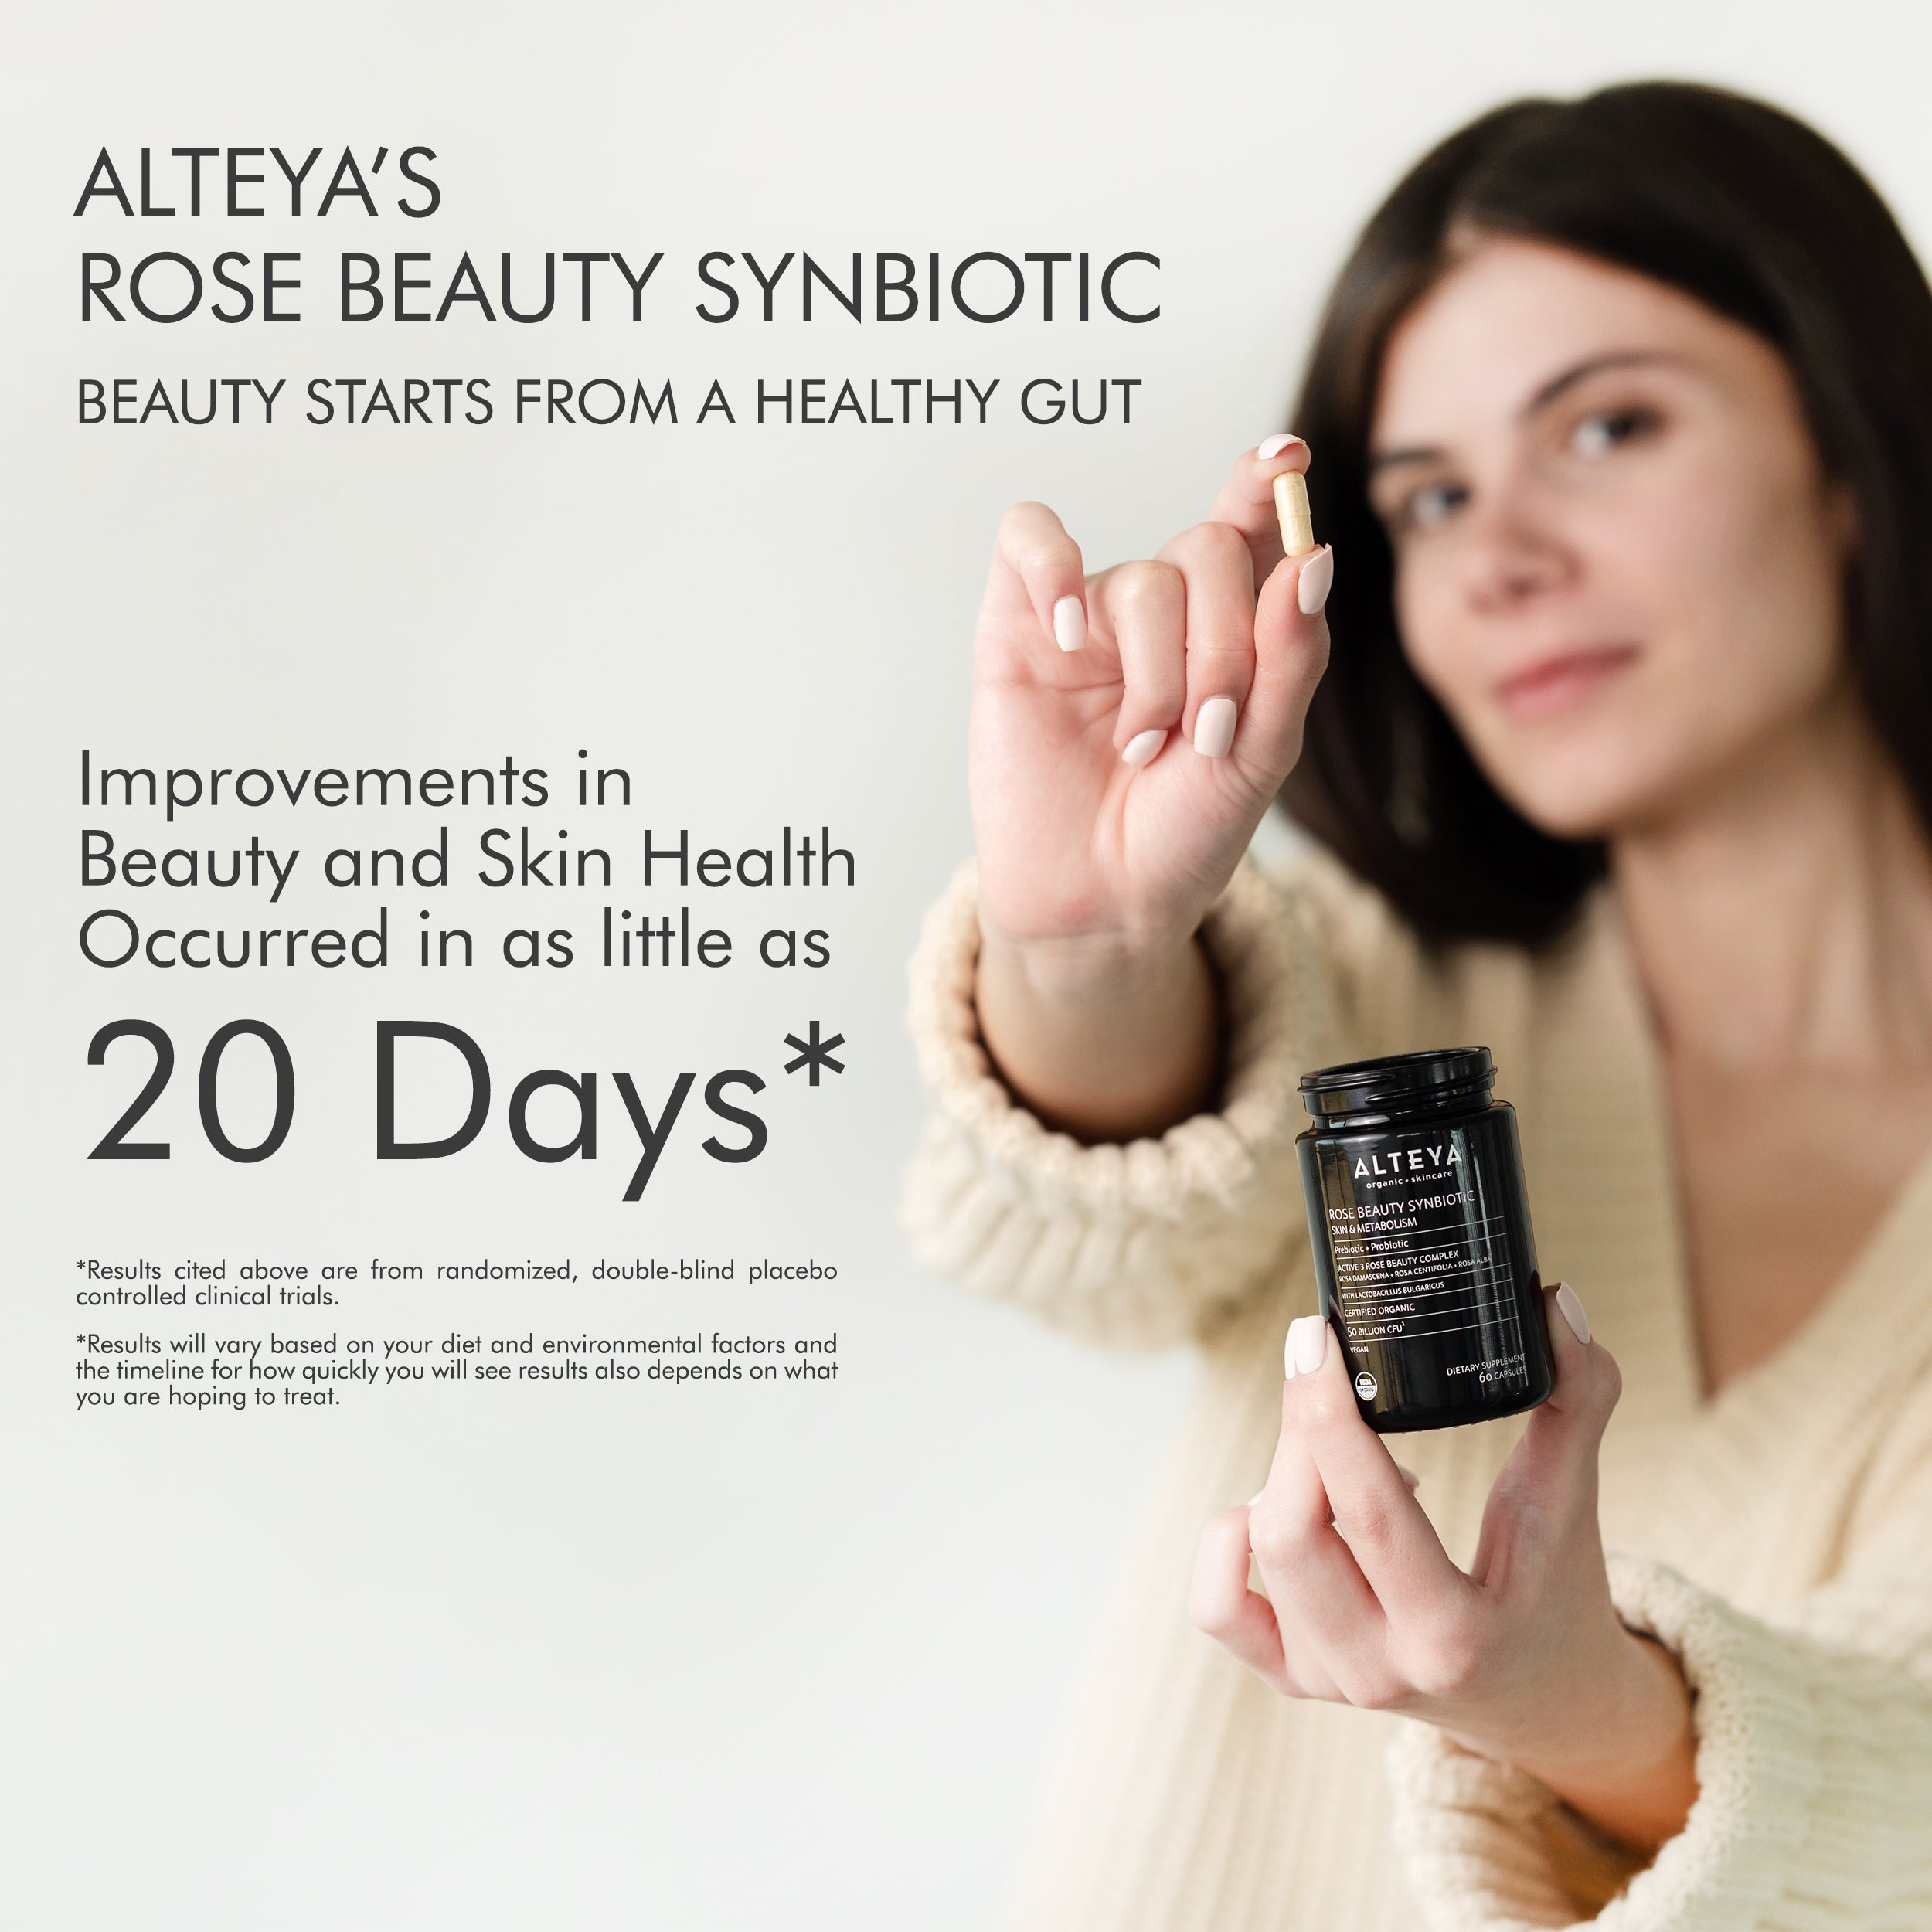 A woman holding a bottle of Alteya Organics' Rose Beauty Prebiotic and Probiotic - Synbiotic Skin & Metabolism Vegan Organic Supplement, promoting gut health.